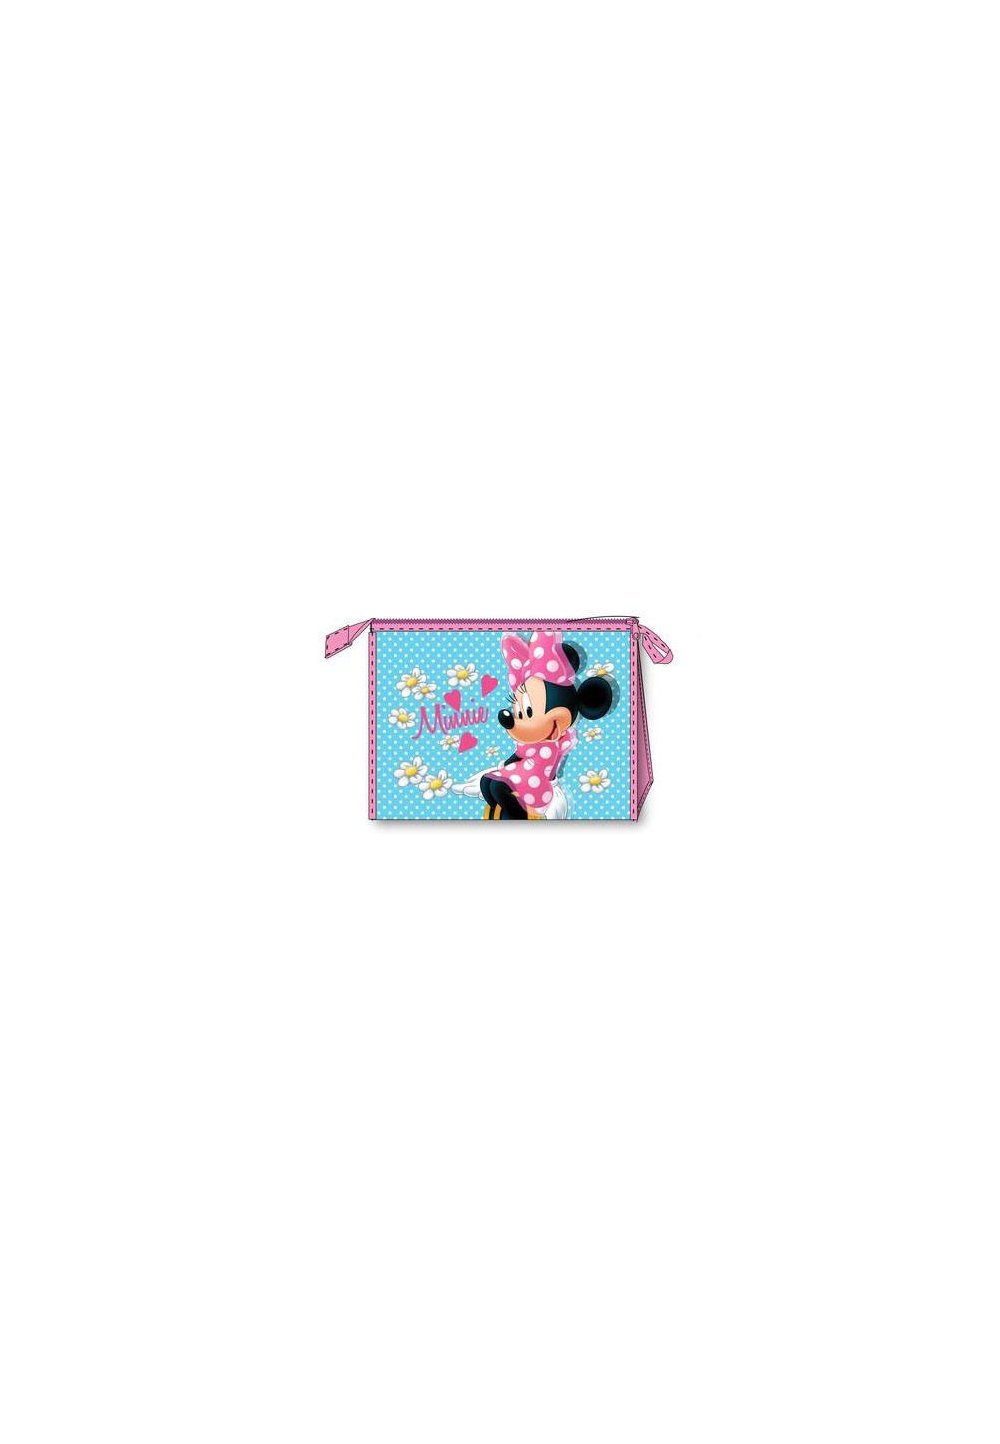 Gentuta portfard, Minnie Mouse, turcoaz cu roz Prichindel